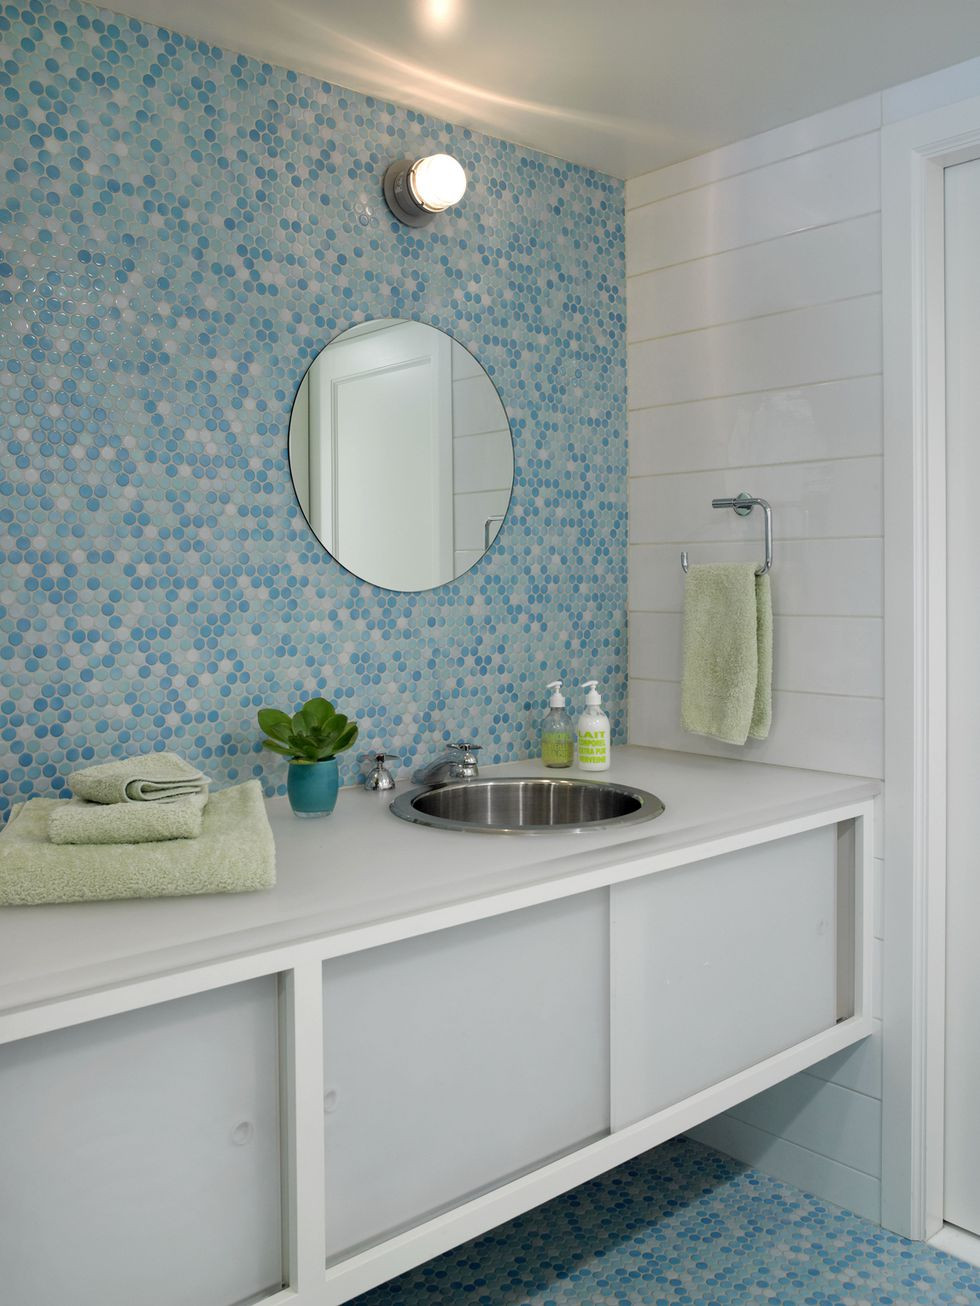 Bathroom Tile Decor
 10 Beautiful Tile Ideas For A Bold Bathroom Interior